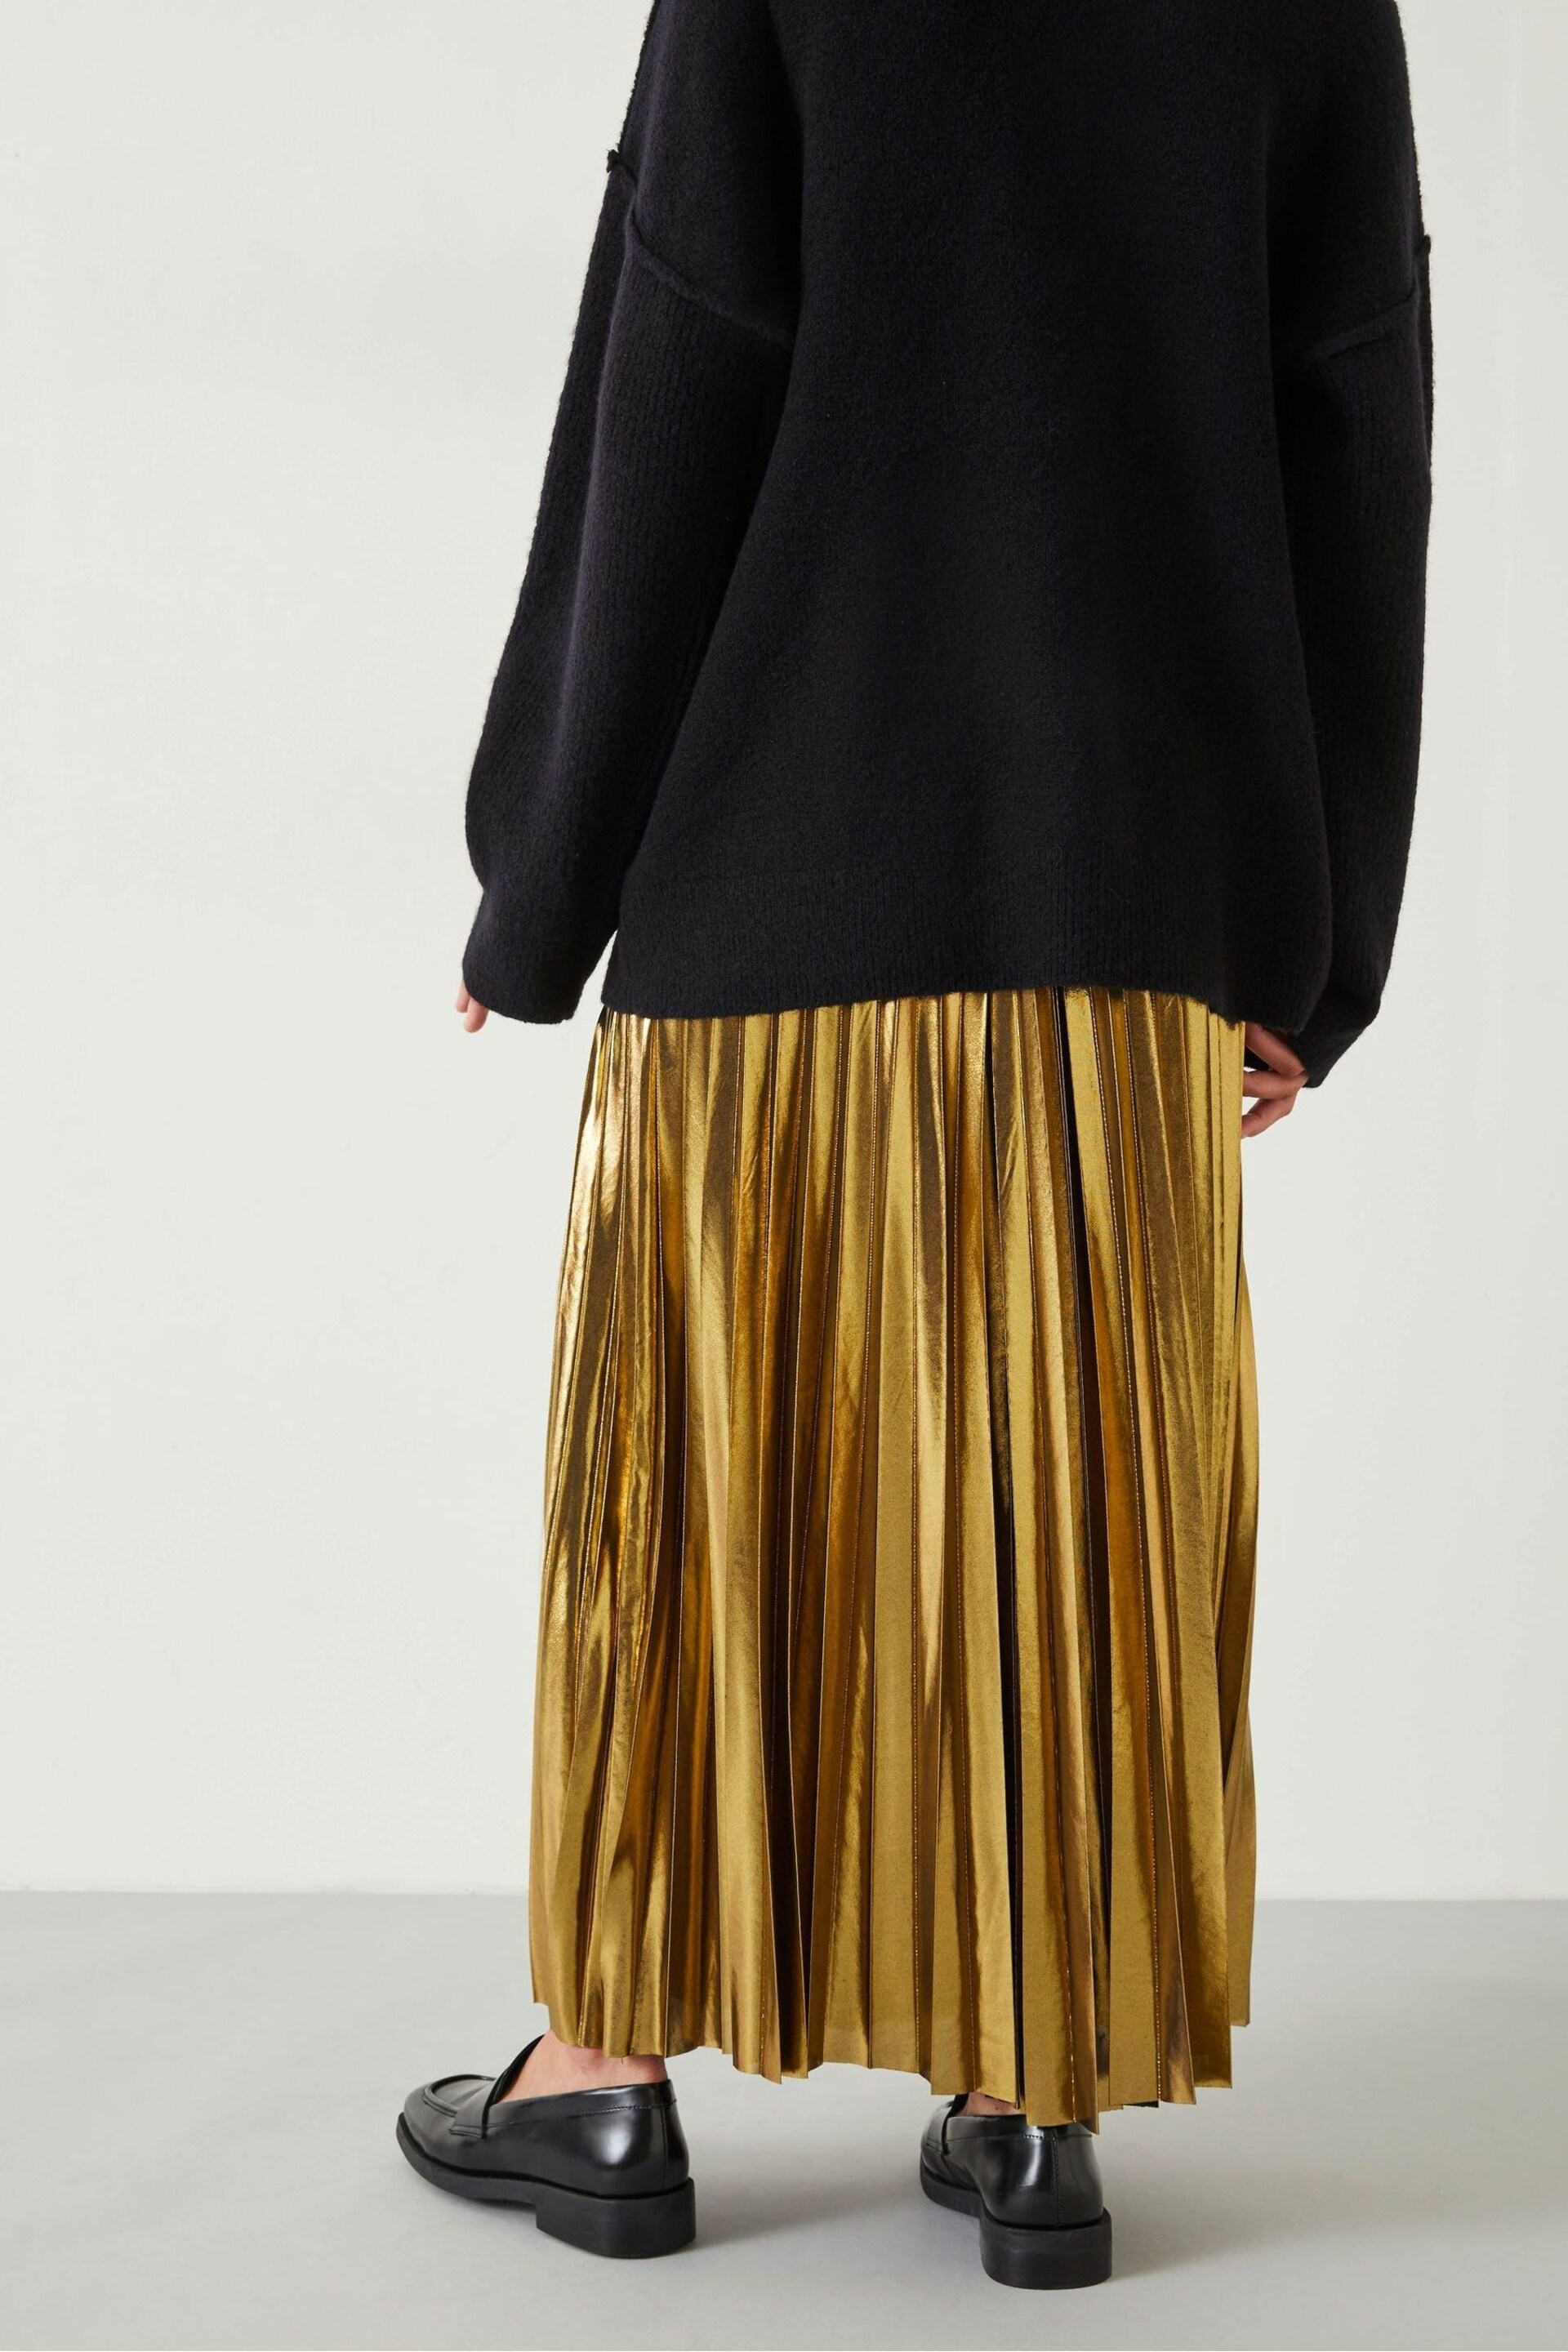 Hush Gold Raven Pleated Maxi Skirt - Image 3 of 5